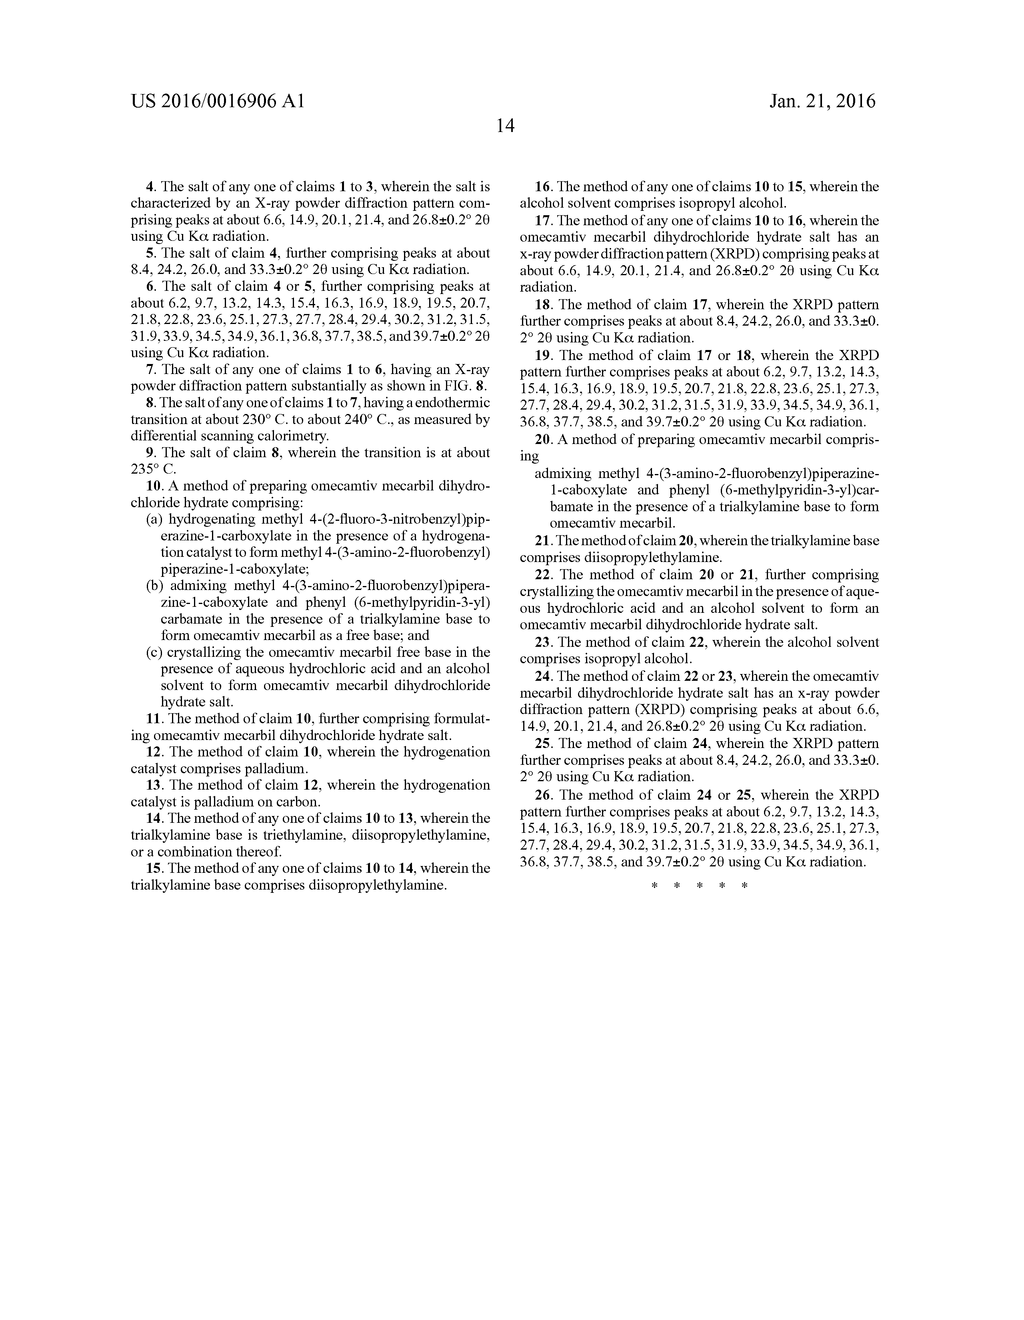 SALT OF OMECAMTIV MECARBIL AND PROCESS FOR PREPARING SALT - diagram, schematic, and image 22